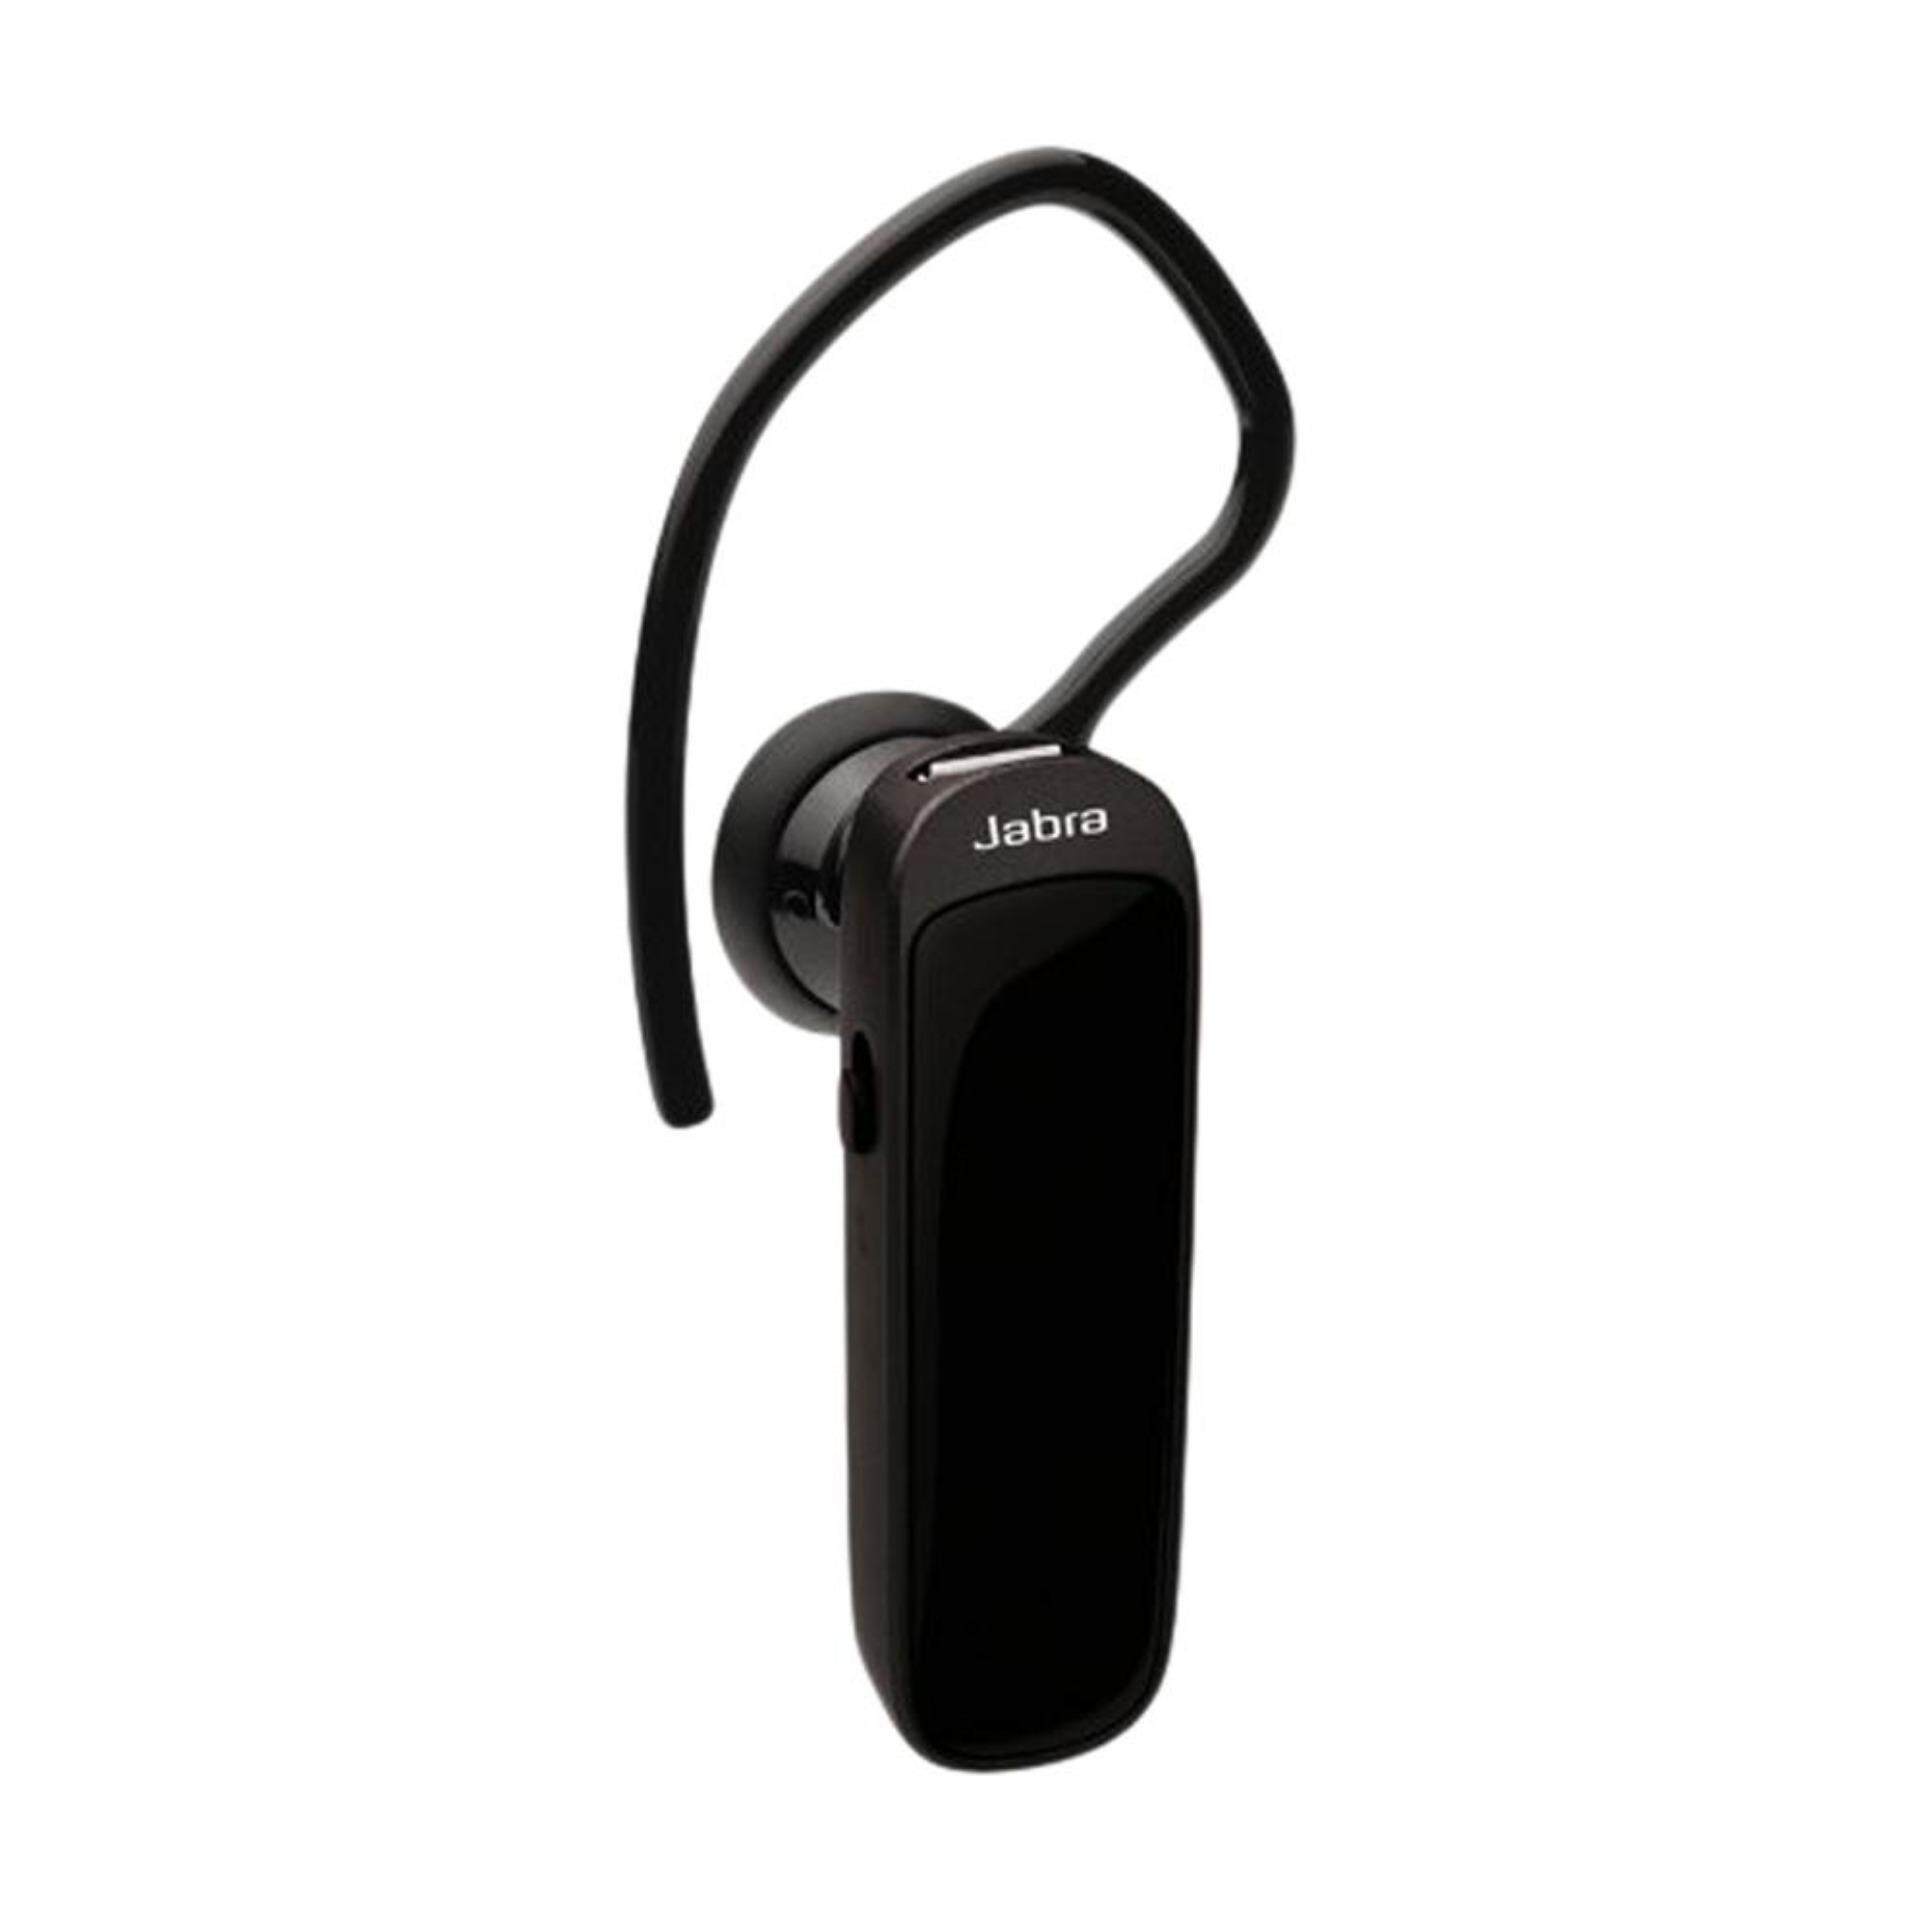 Jabra Mini Up Bluetooth Handsfree Wireless Headsets (Black)